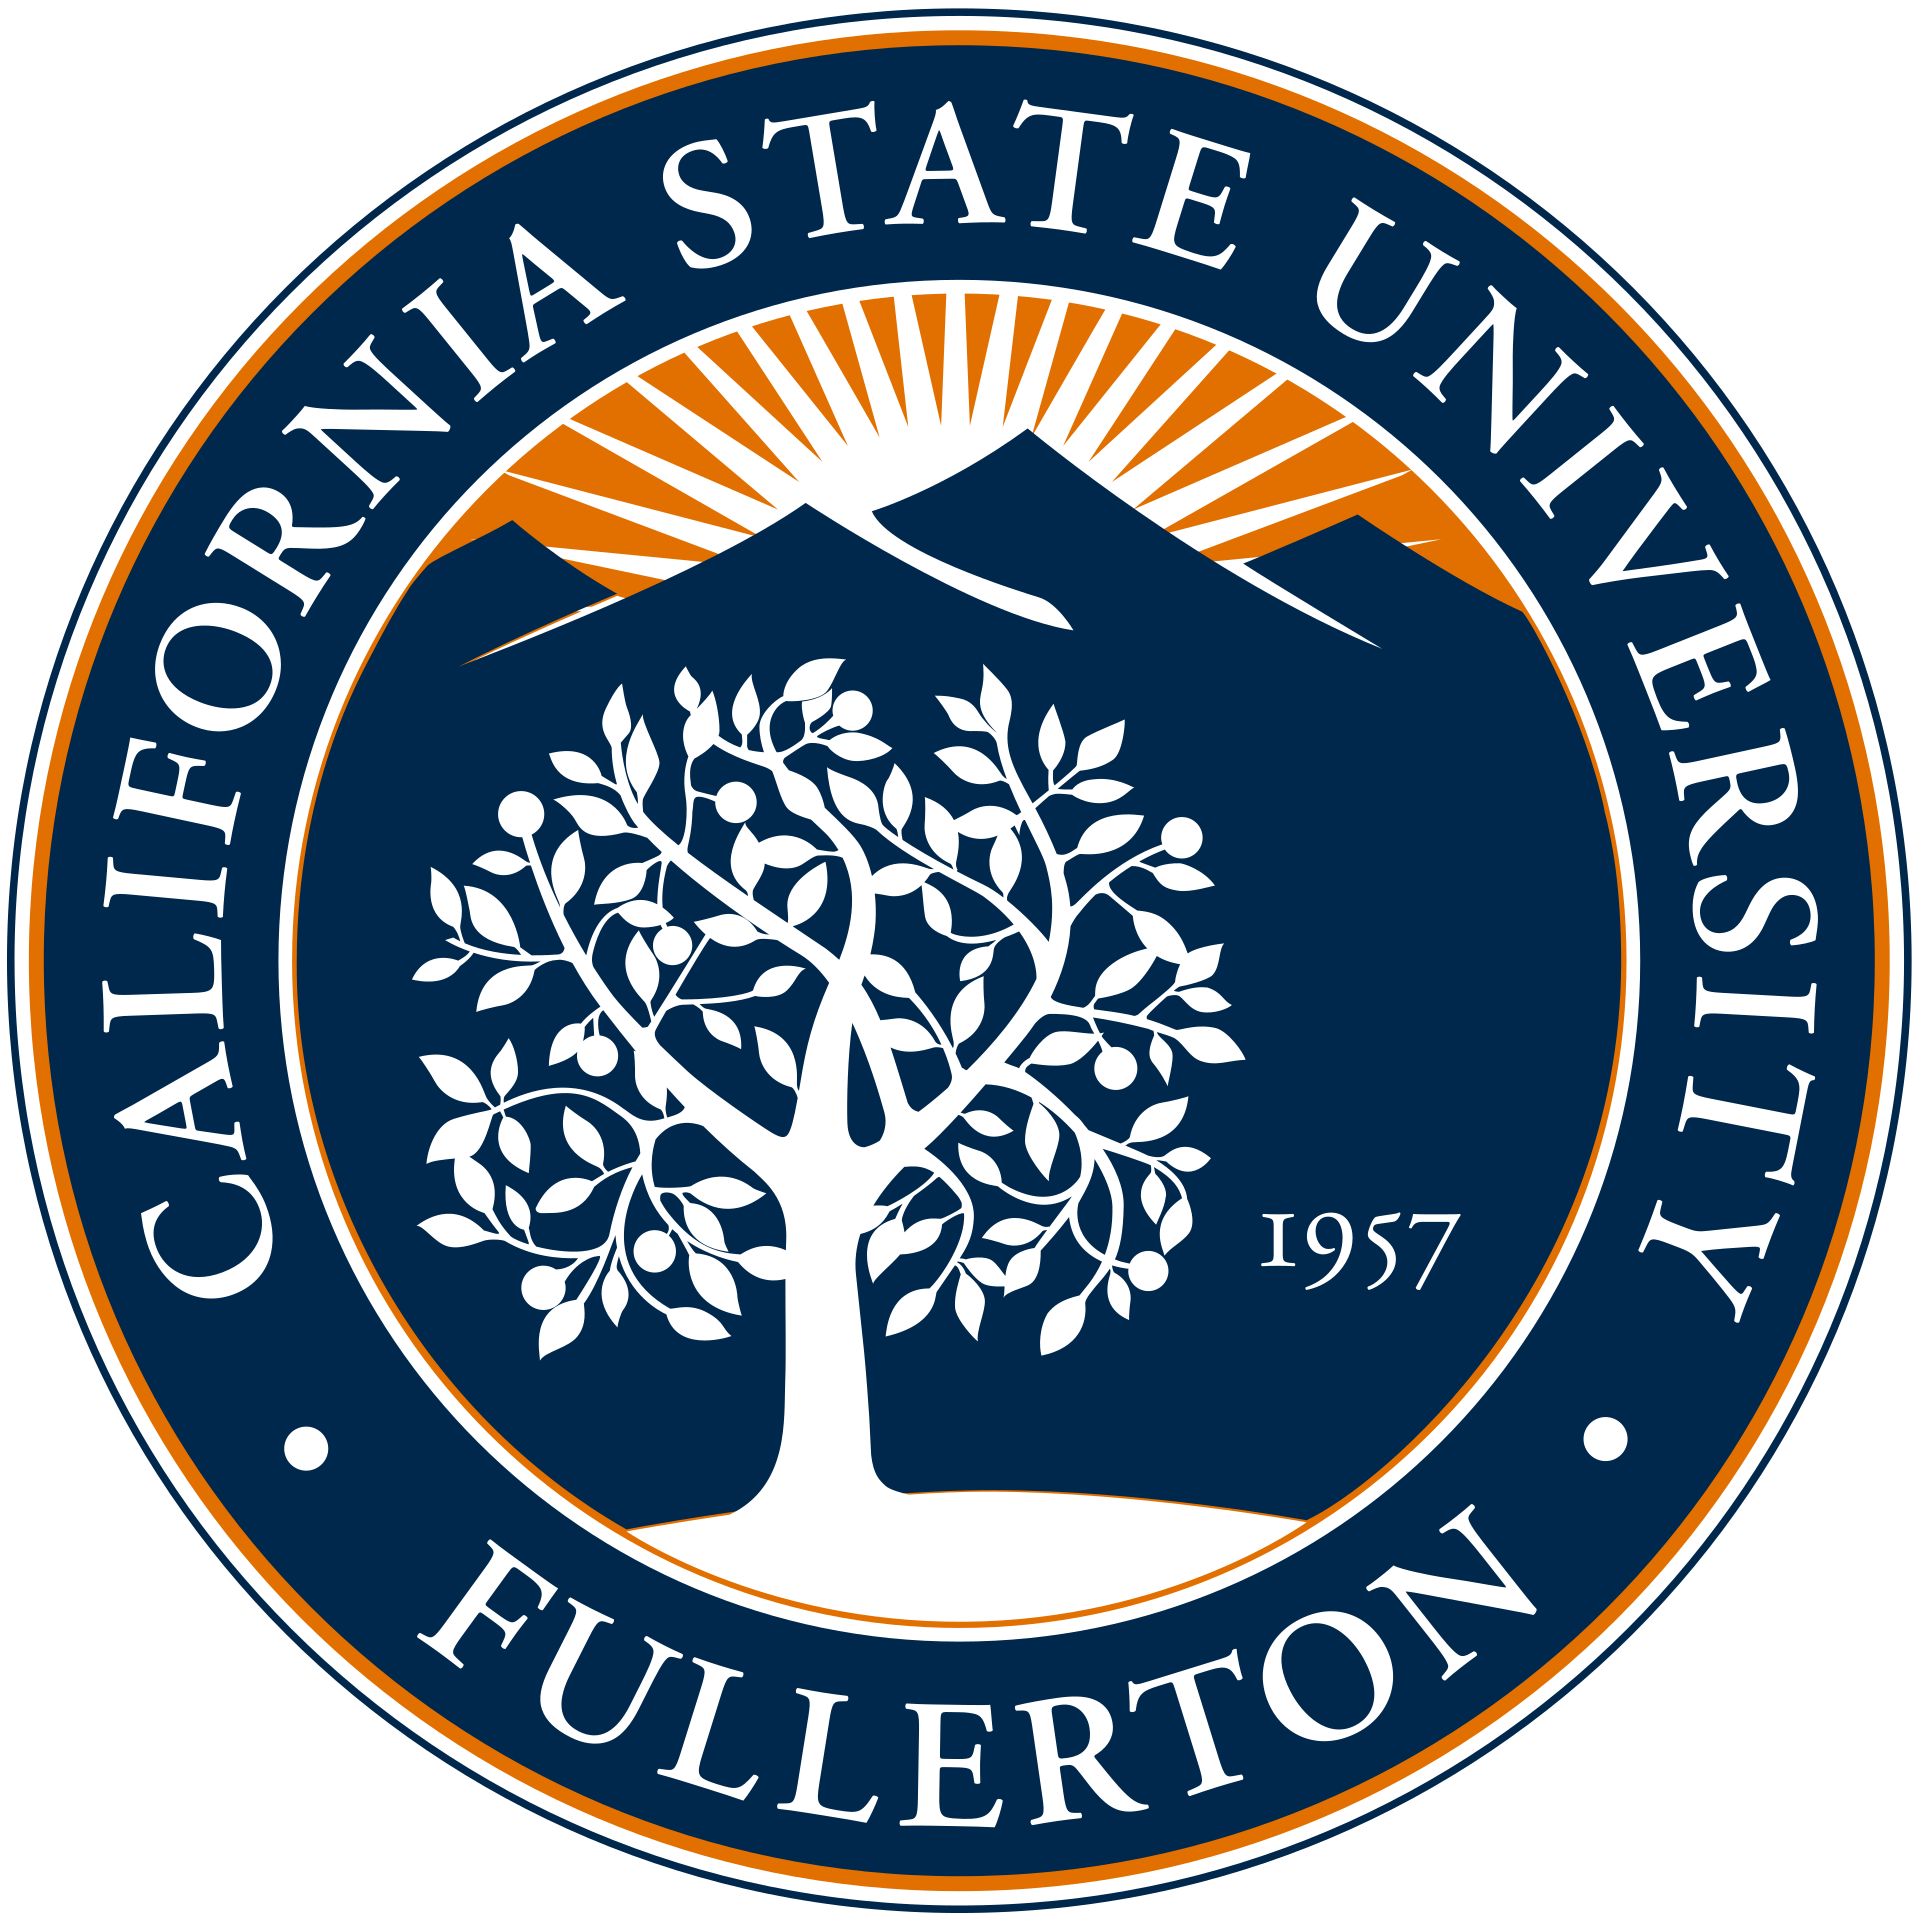 California_State_University,_Fullerton_seal.png